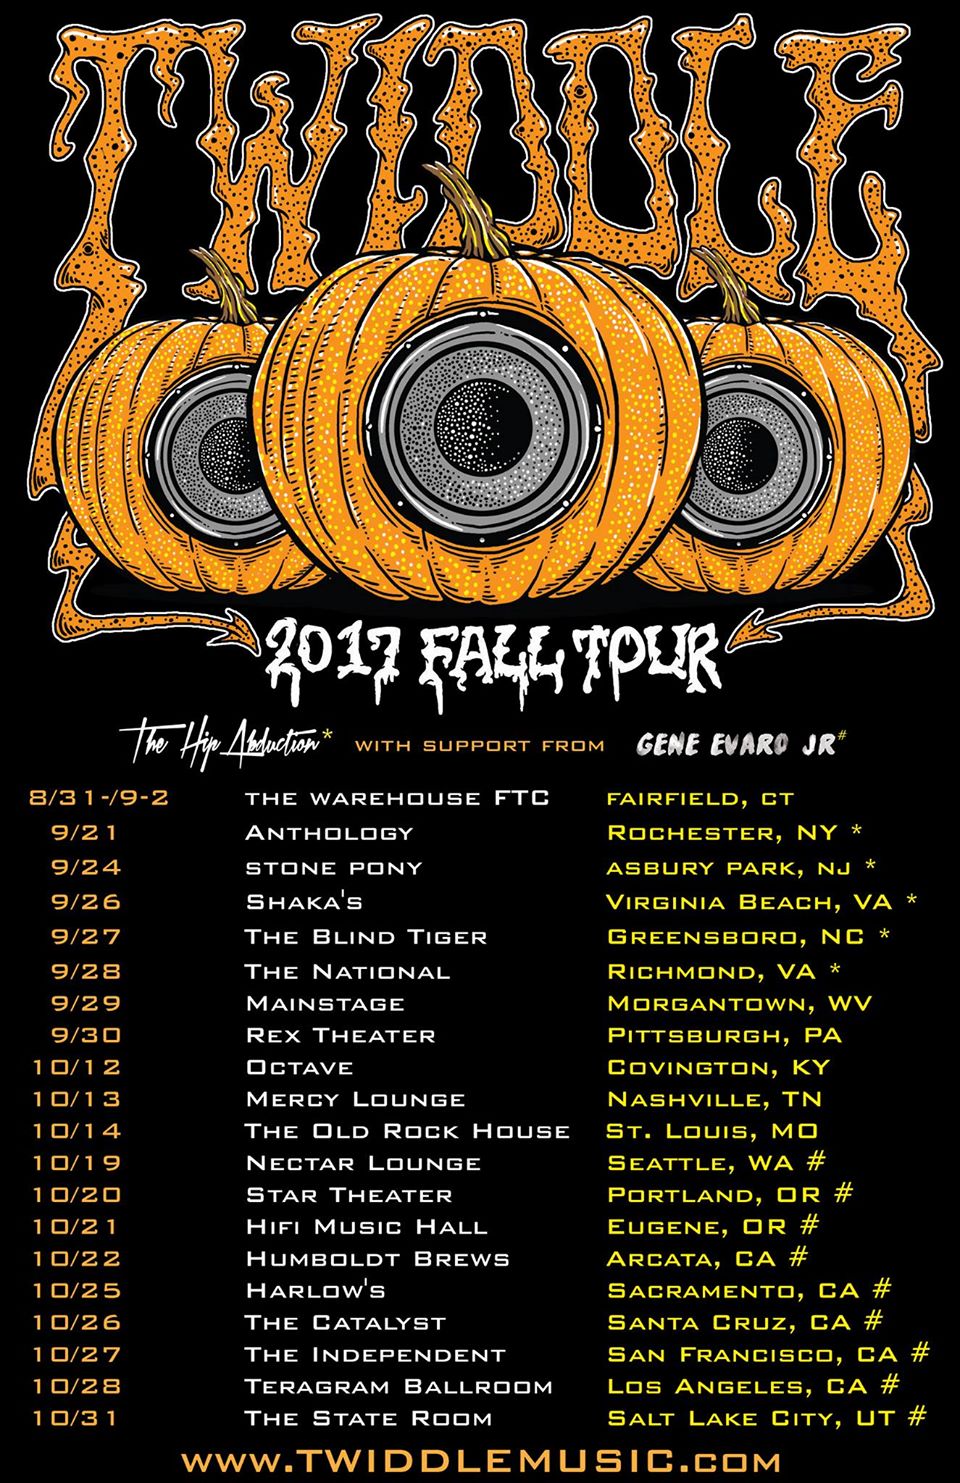 twiddle tour dates